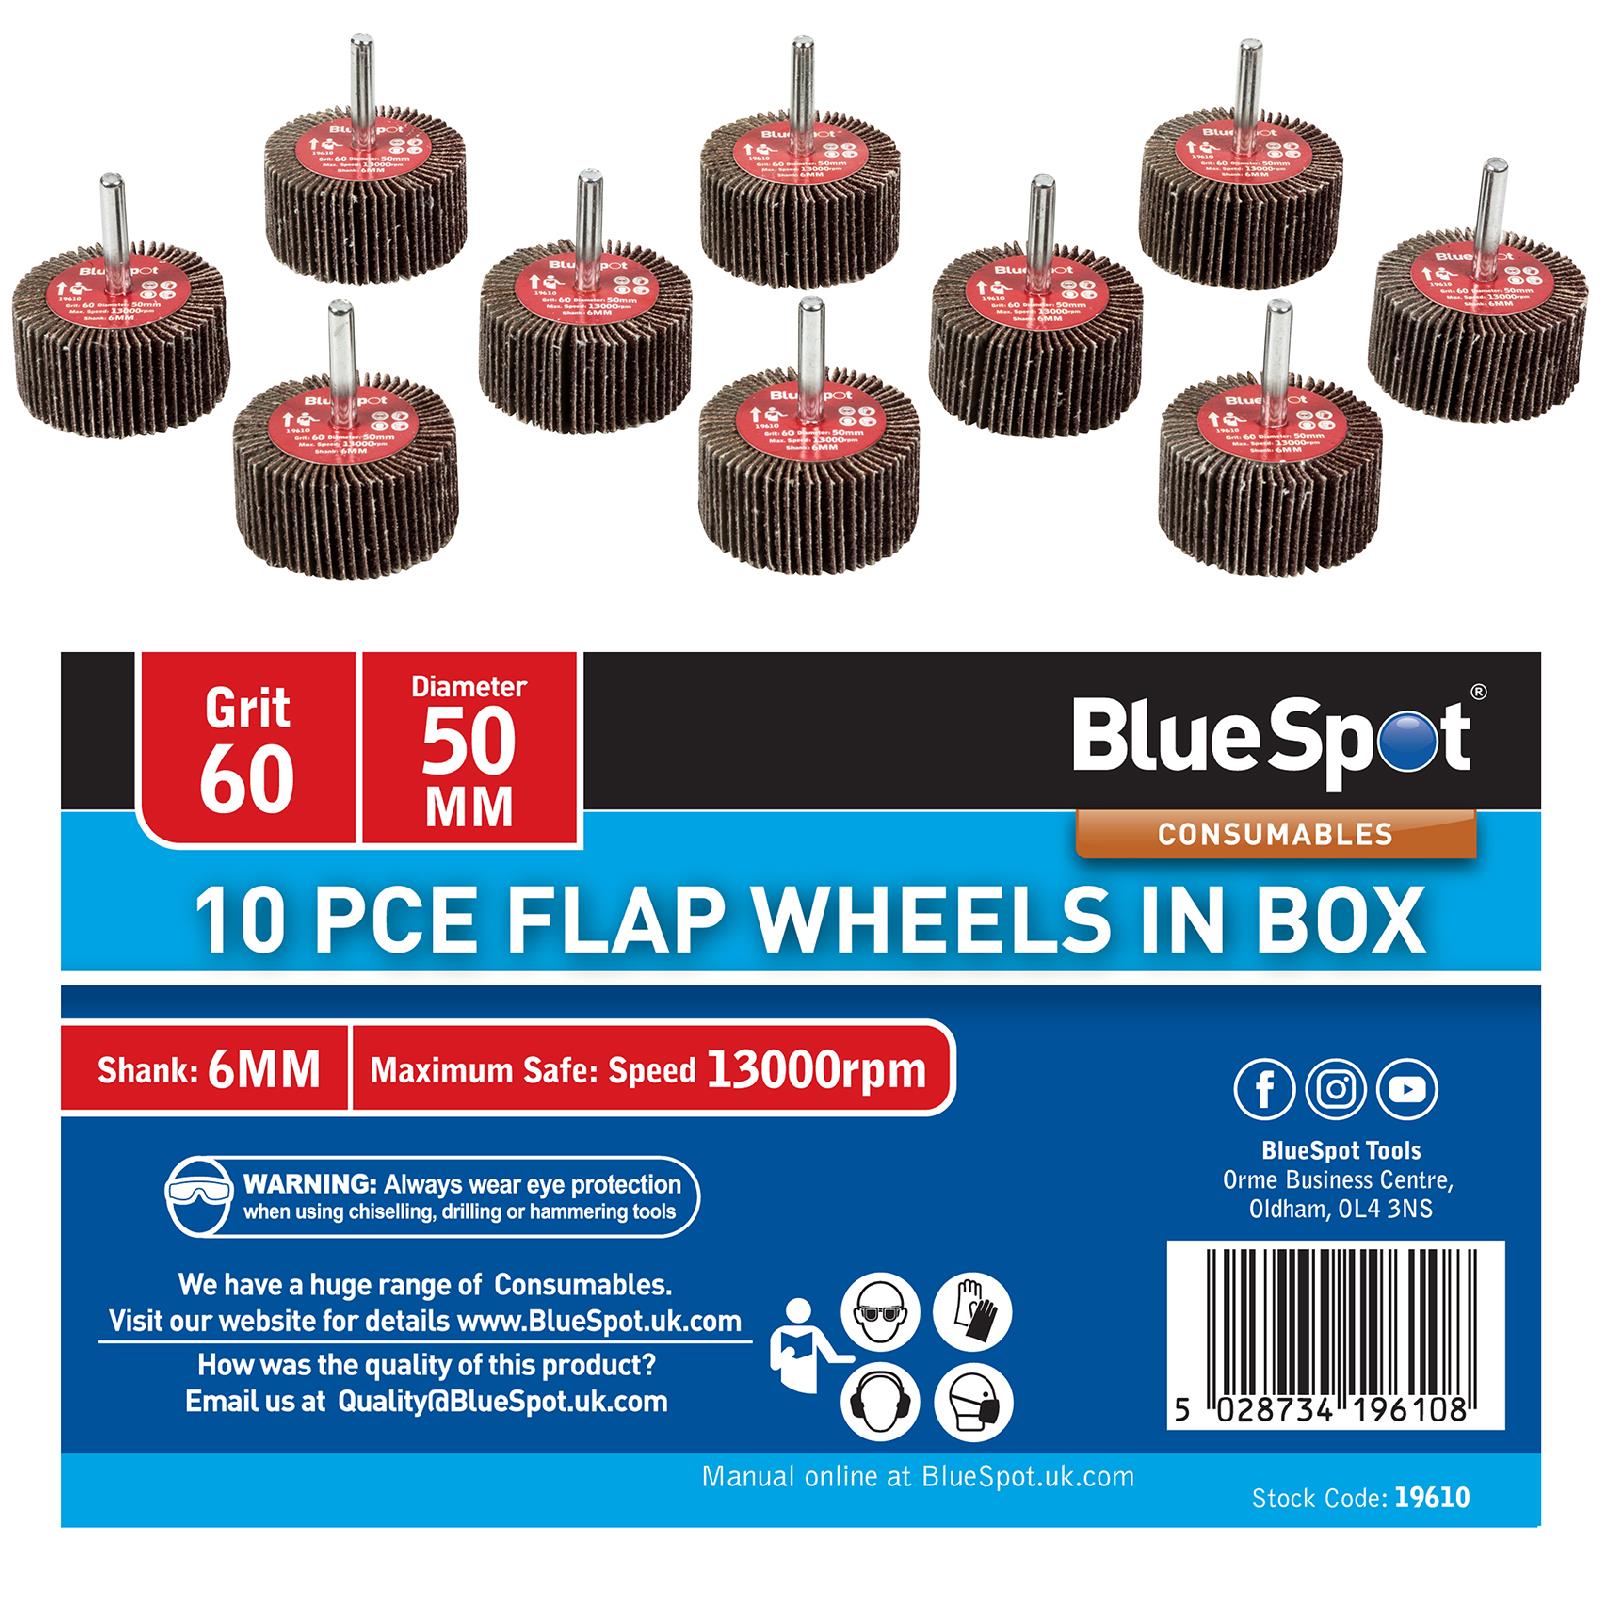 BlueSpot Flap Wheels In Box 10 Pieces 60 Grit 50mm